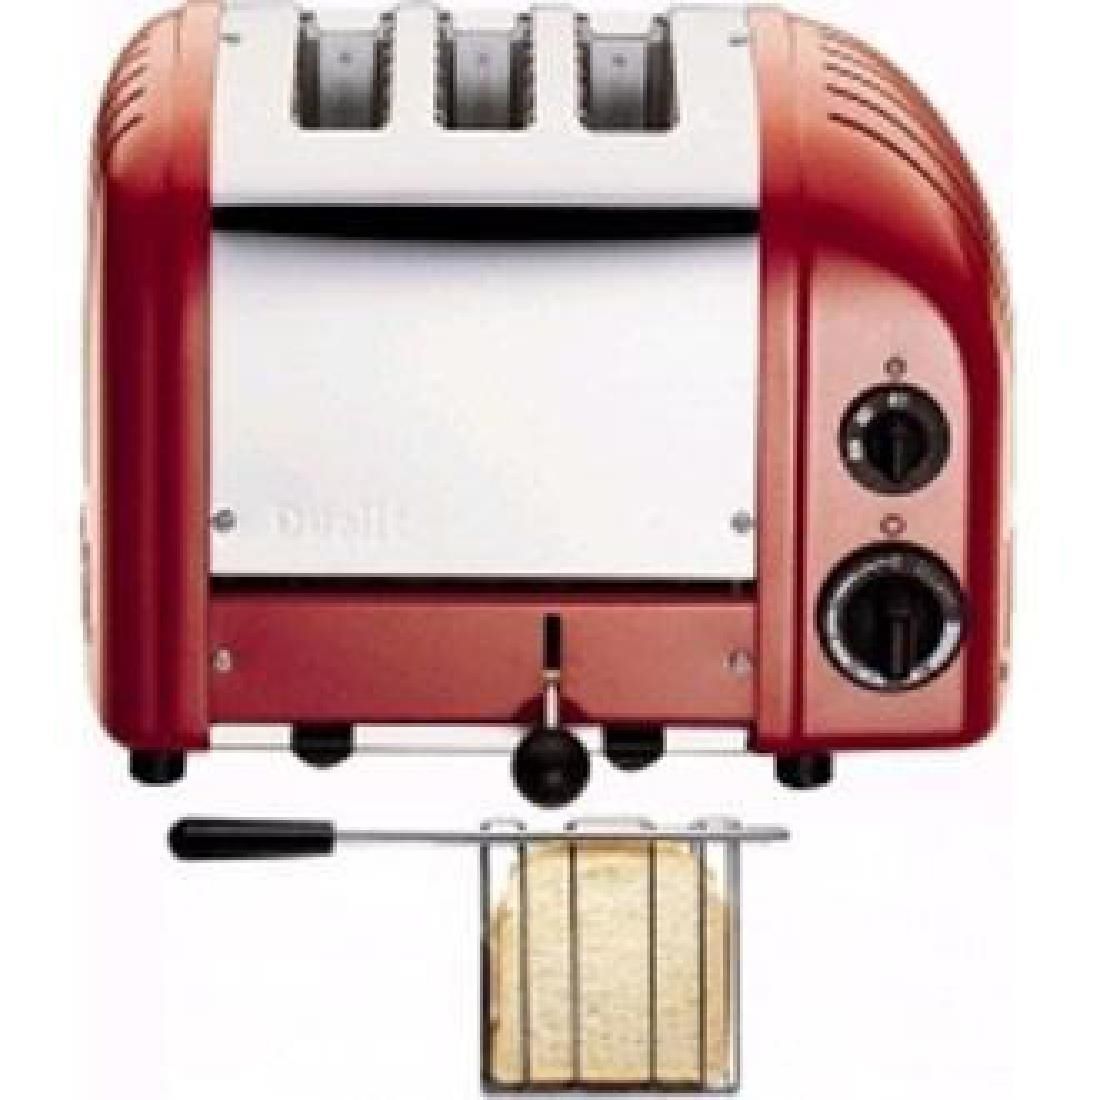 Dualit 2 + 1 Combi Vario 3 Slice Toaster Red 31214 JD Catering Equipment Solutions Ltd